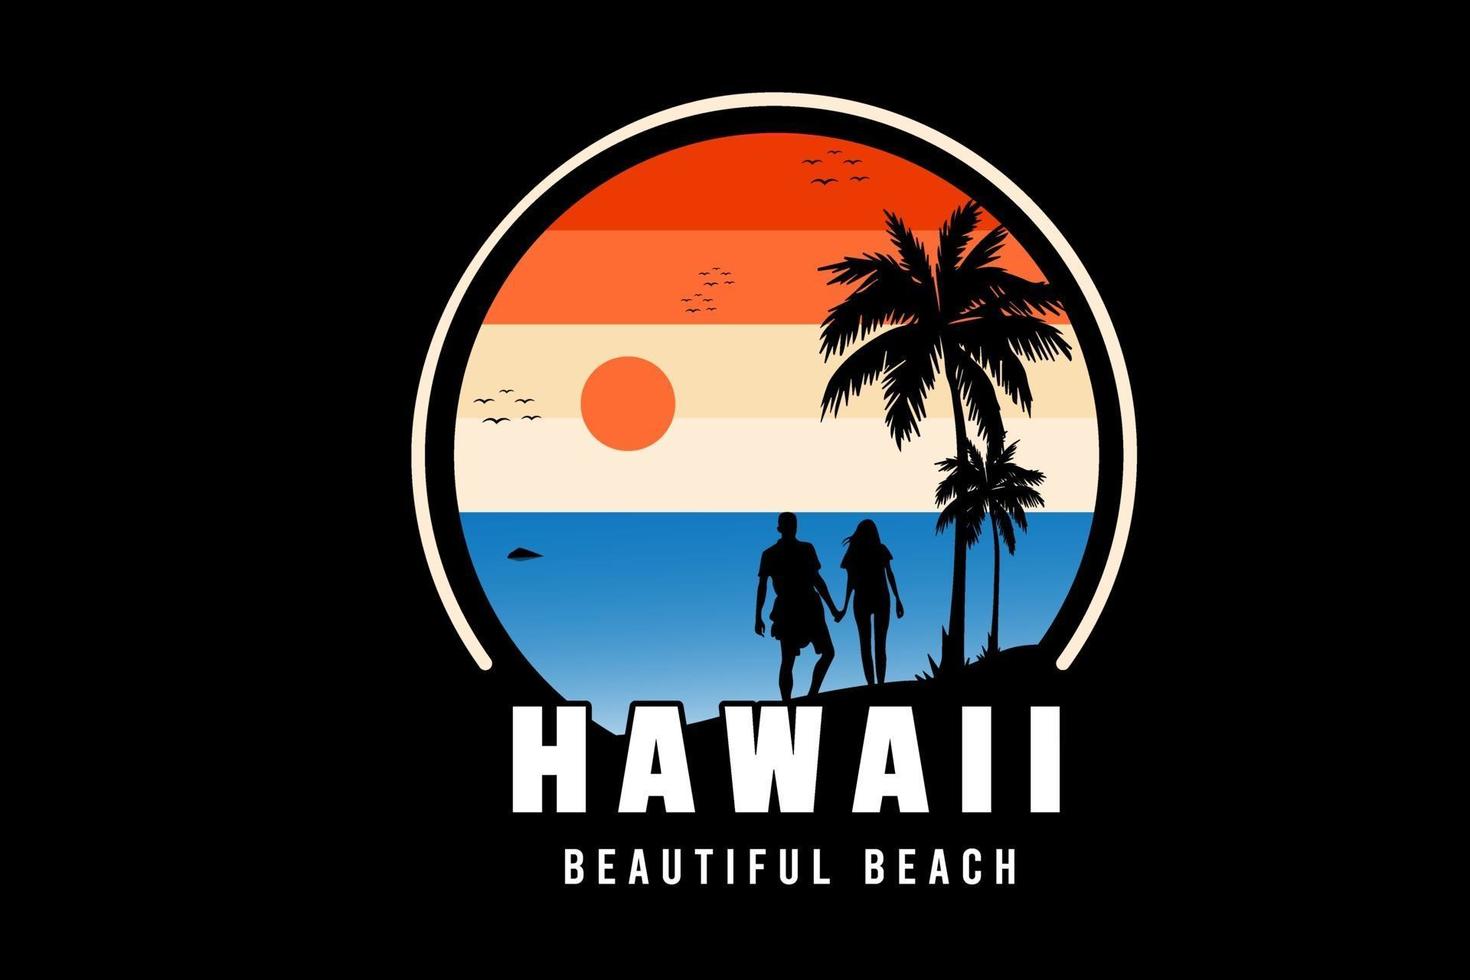 hawaii hermosa playa color naranja blanco y azul vector